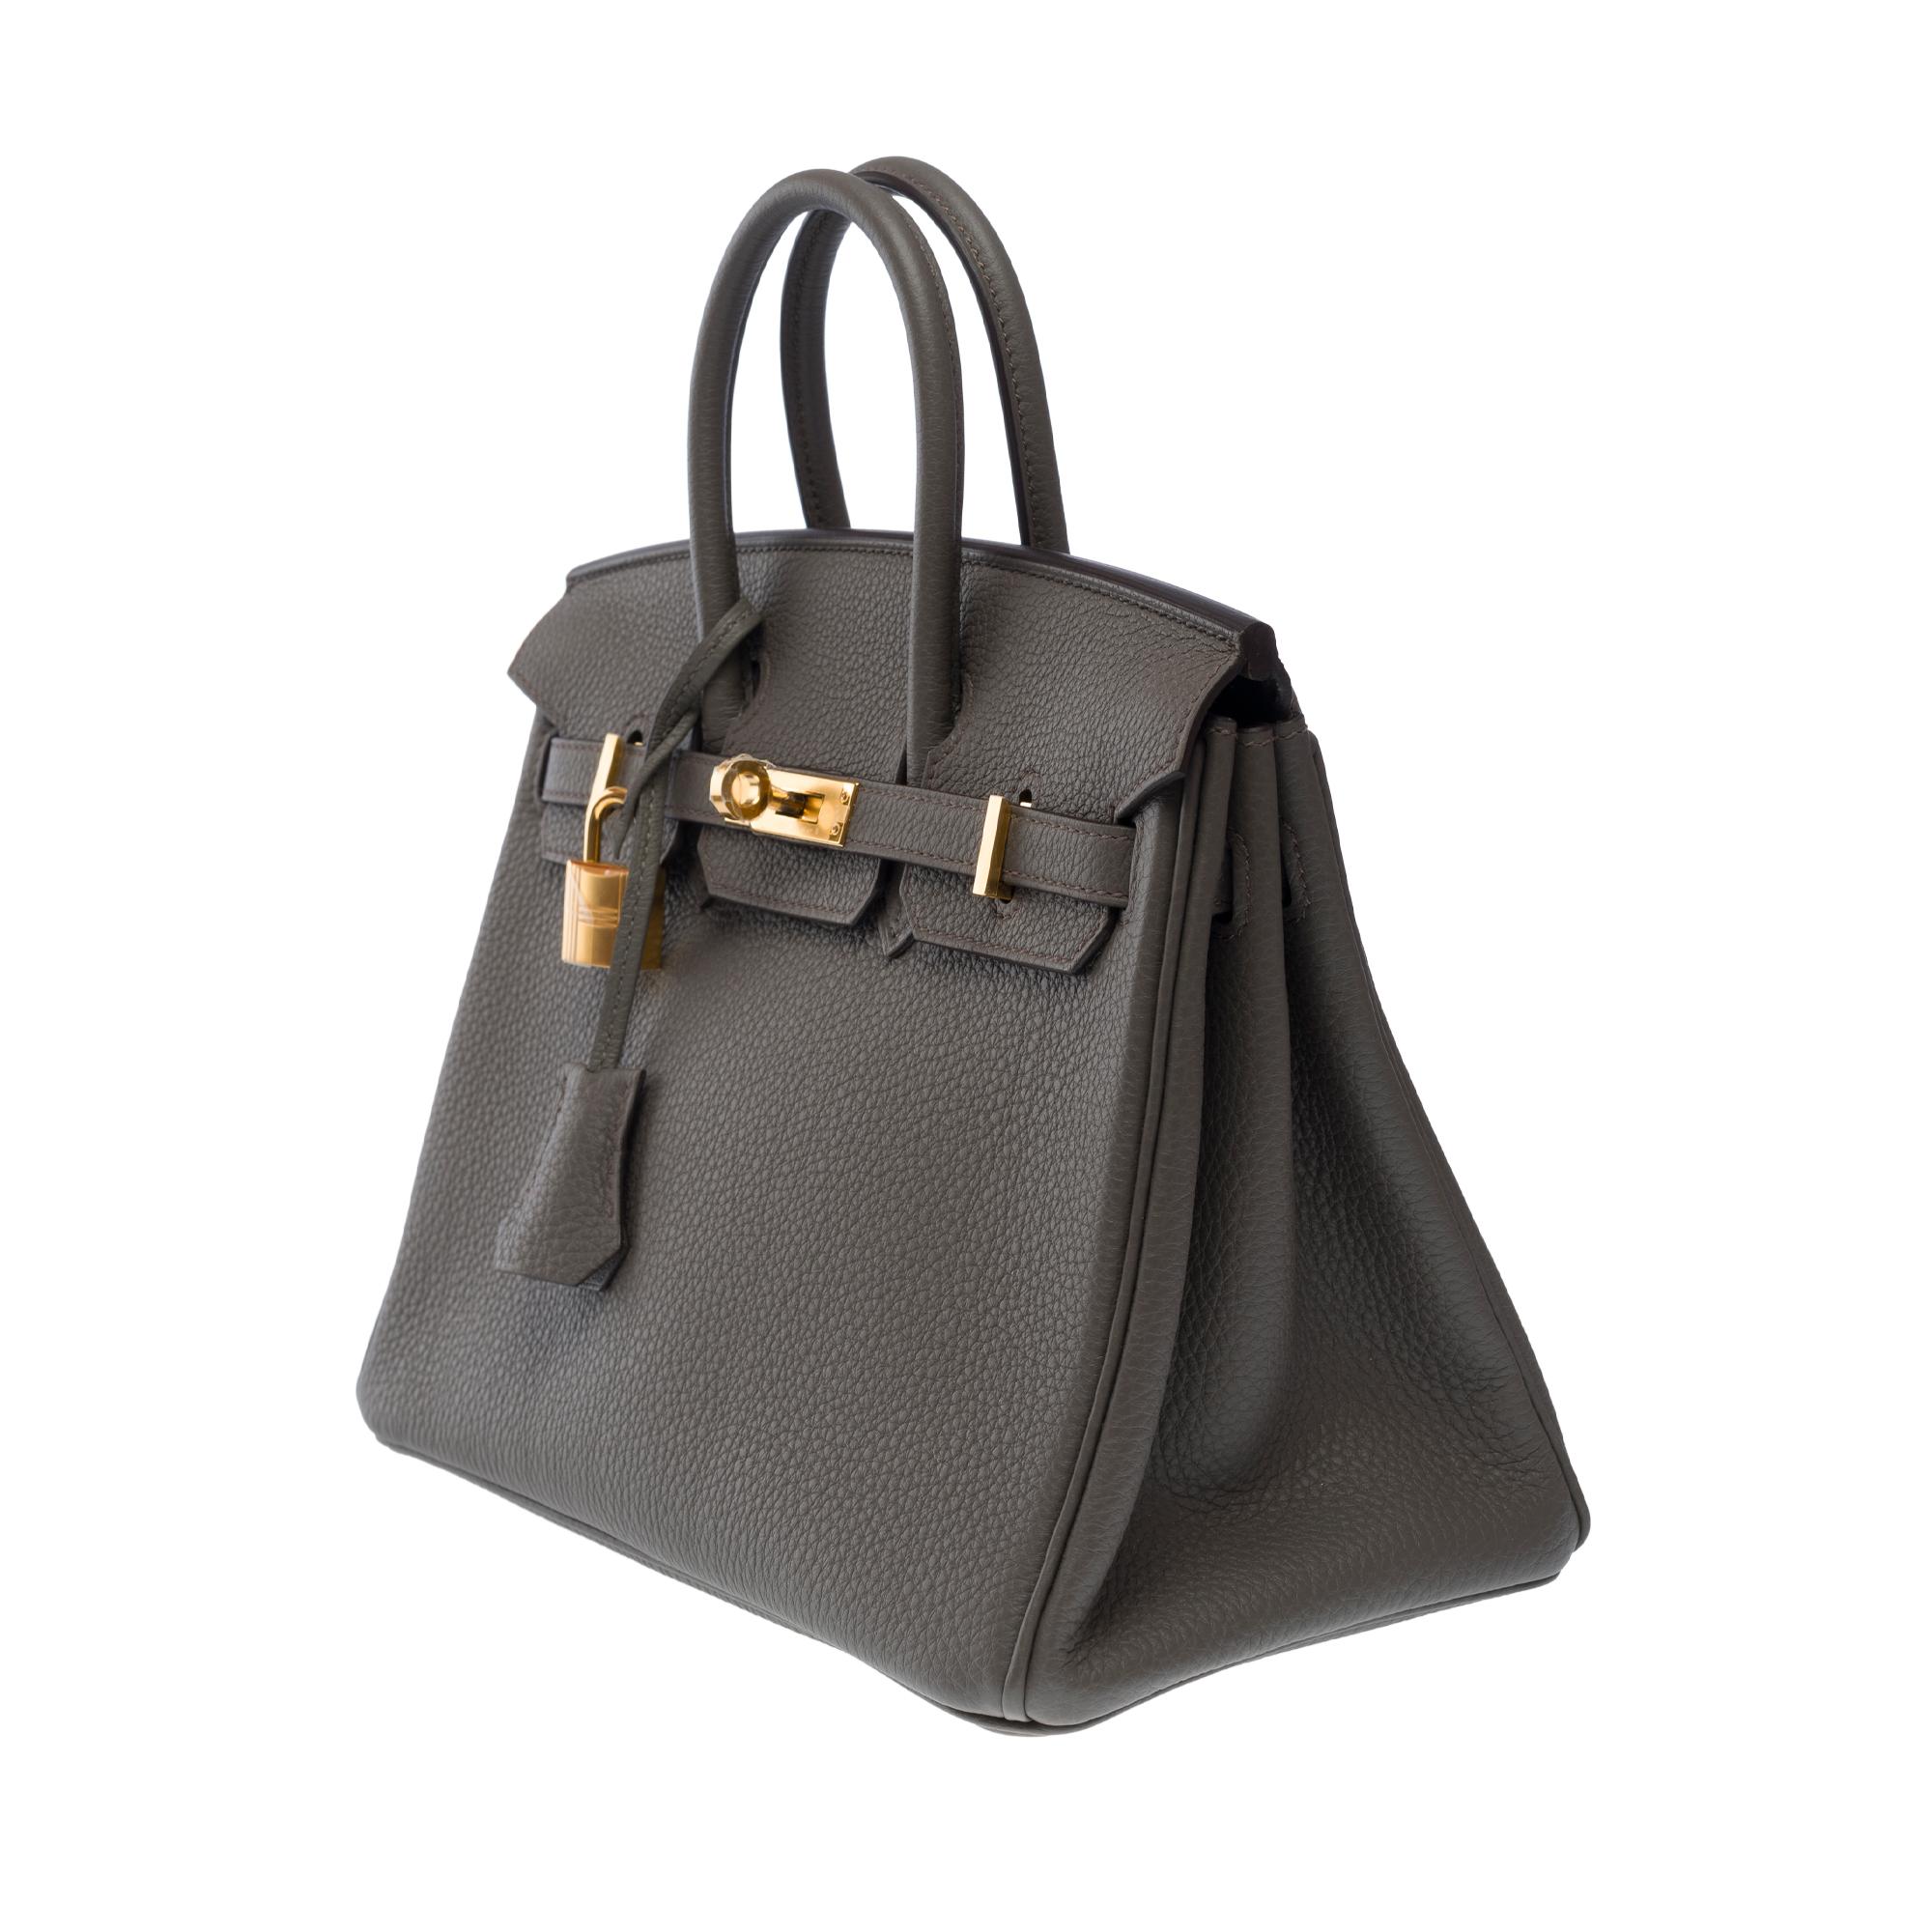 Women's Fantastic New Hermes Birkin 25cm handbag in Etain Togo leather, GHW